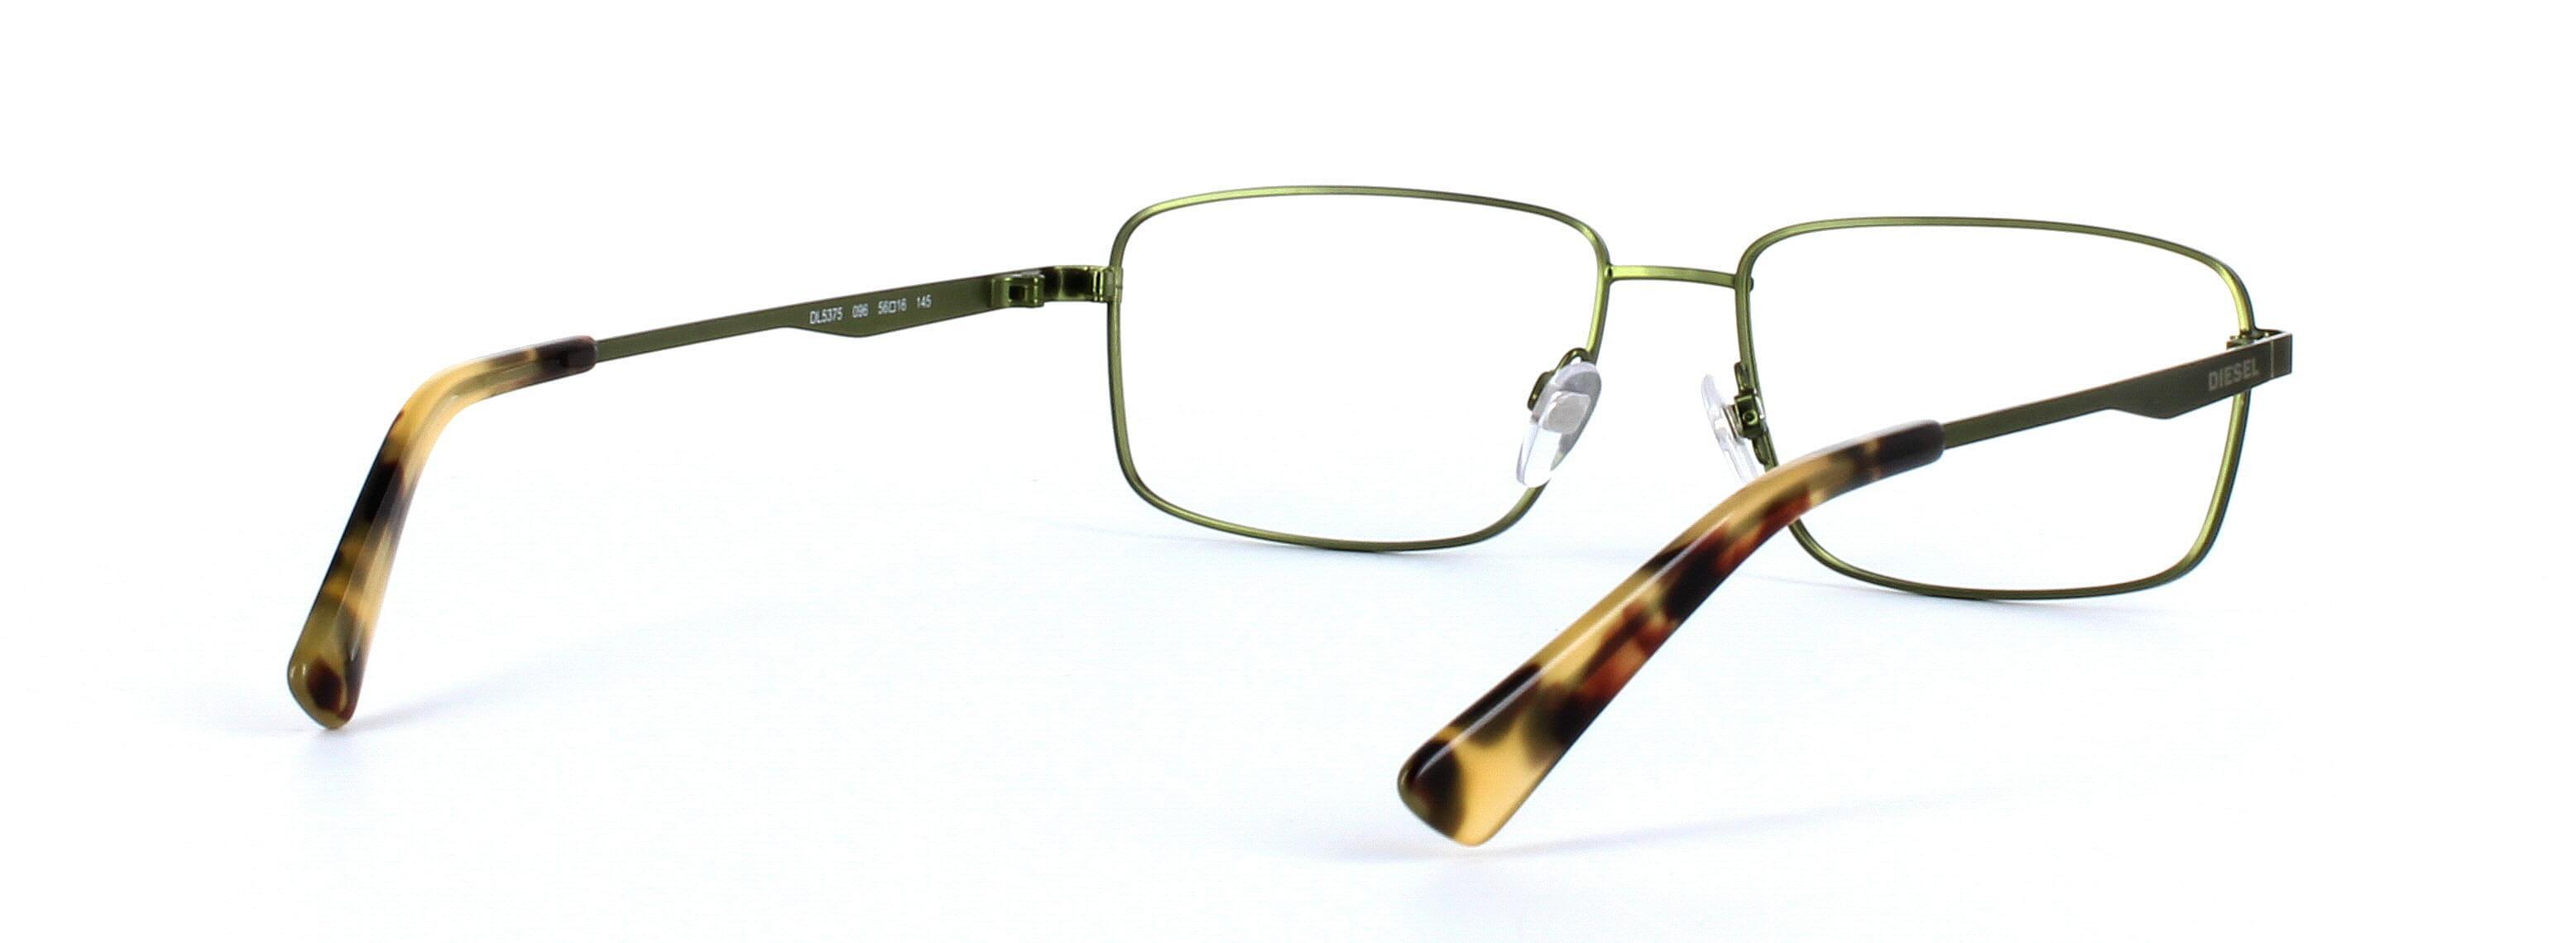 Diesel (DL5375-096) Olive Green Full Rim Rectangular Metal Glasses - Image View 4